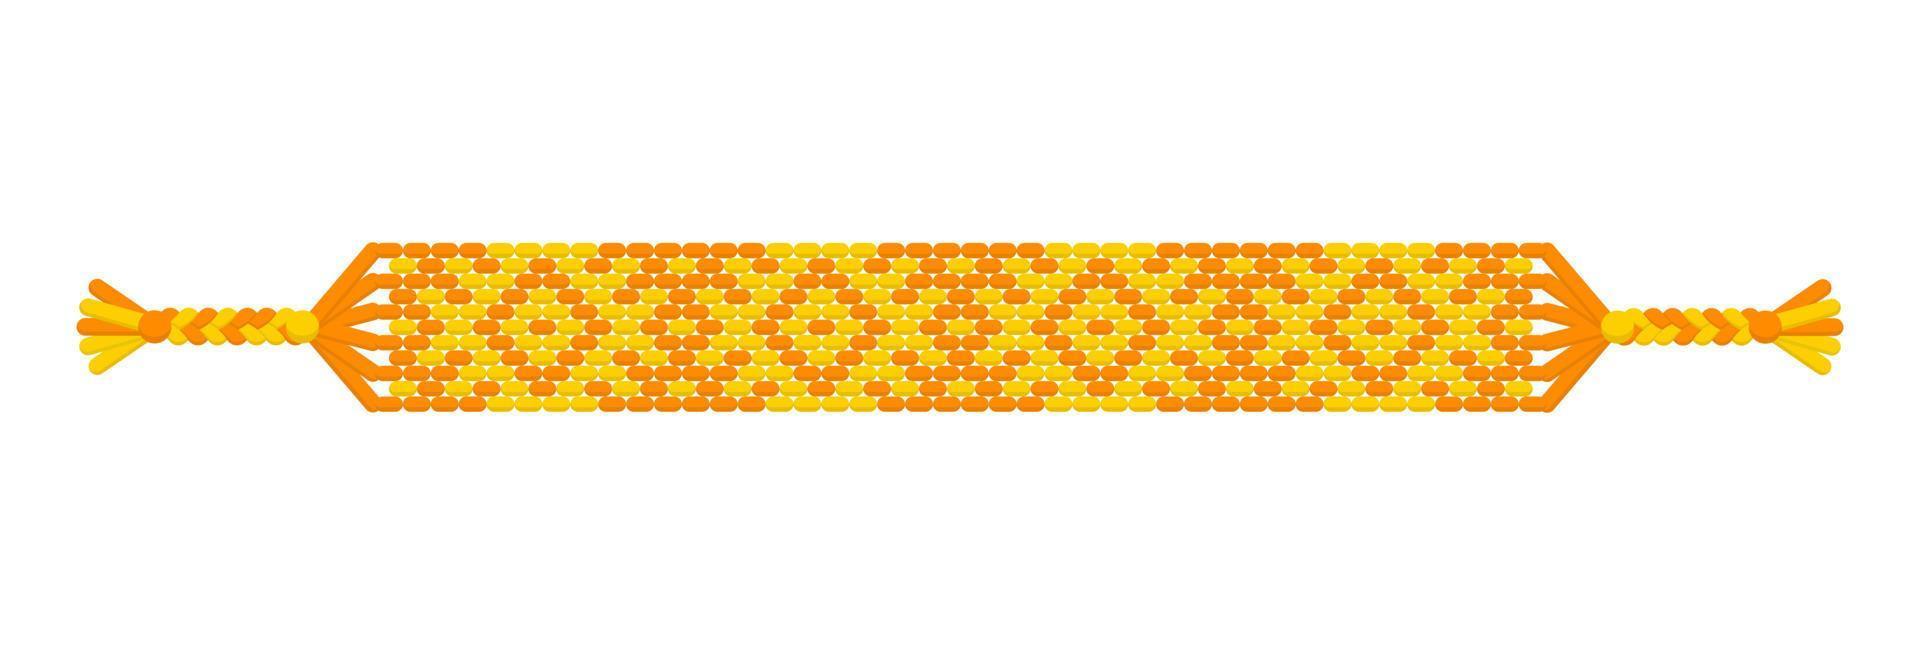 Vector multicolored handmade hippie friendship bracelet of yellow and orange threads.